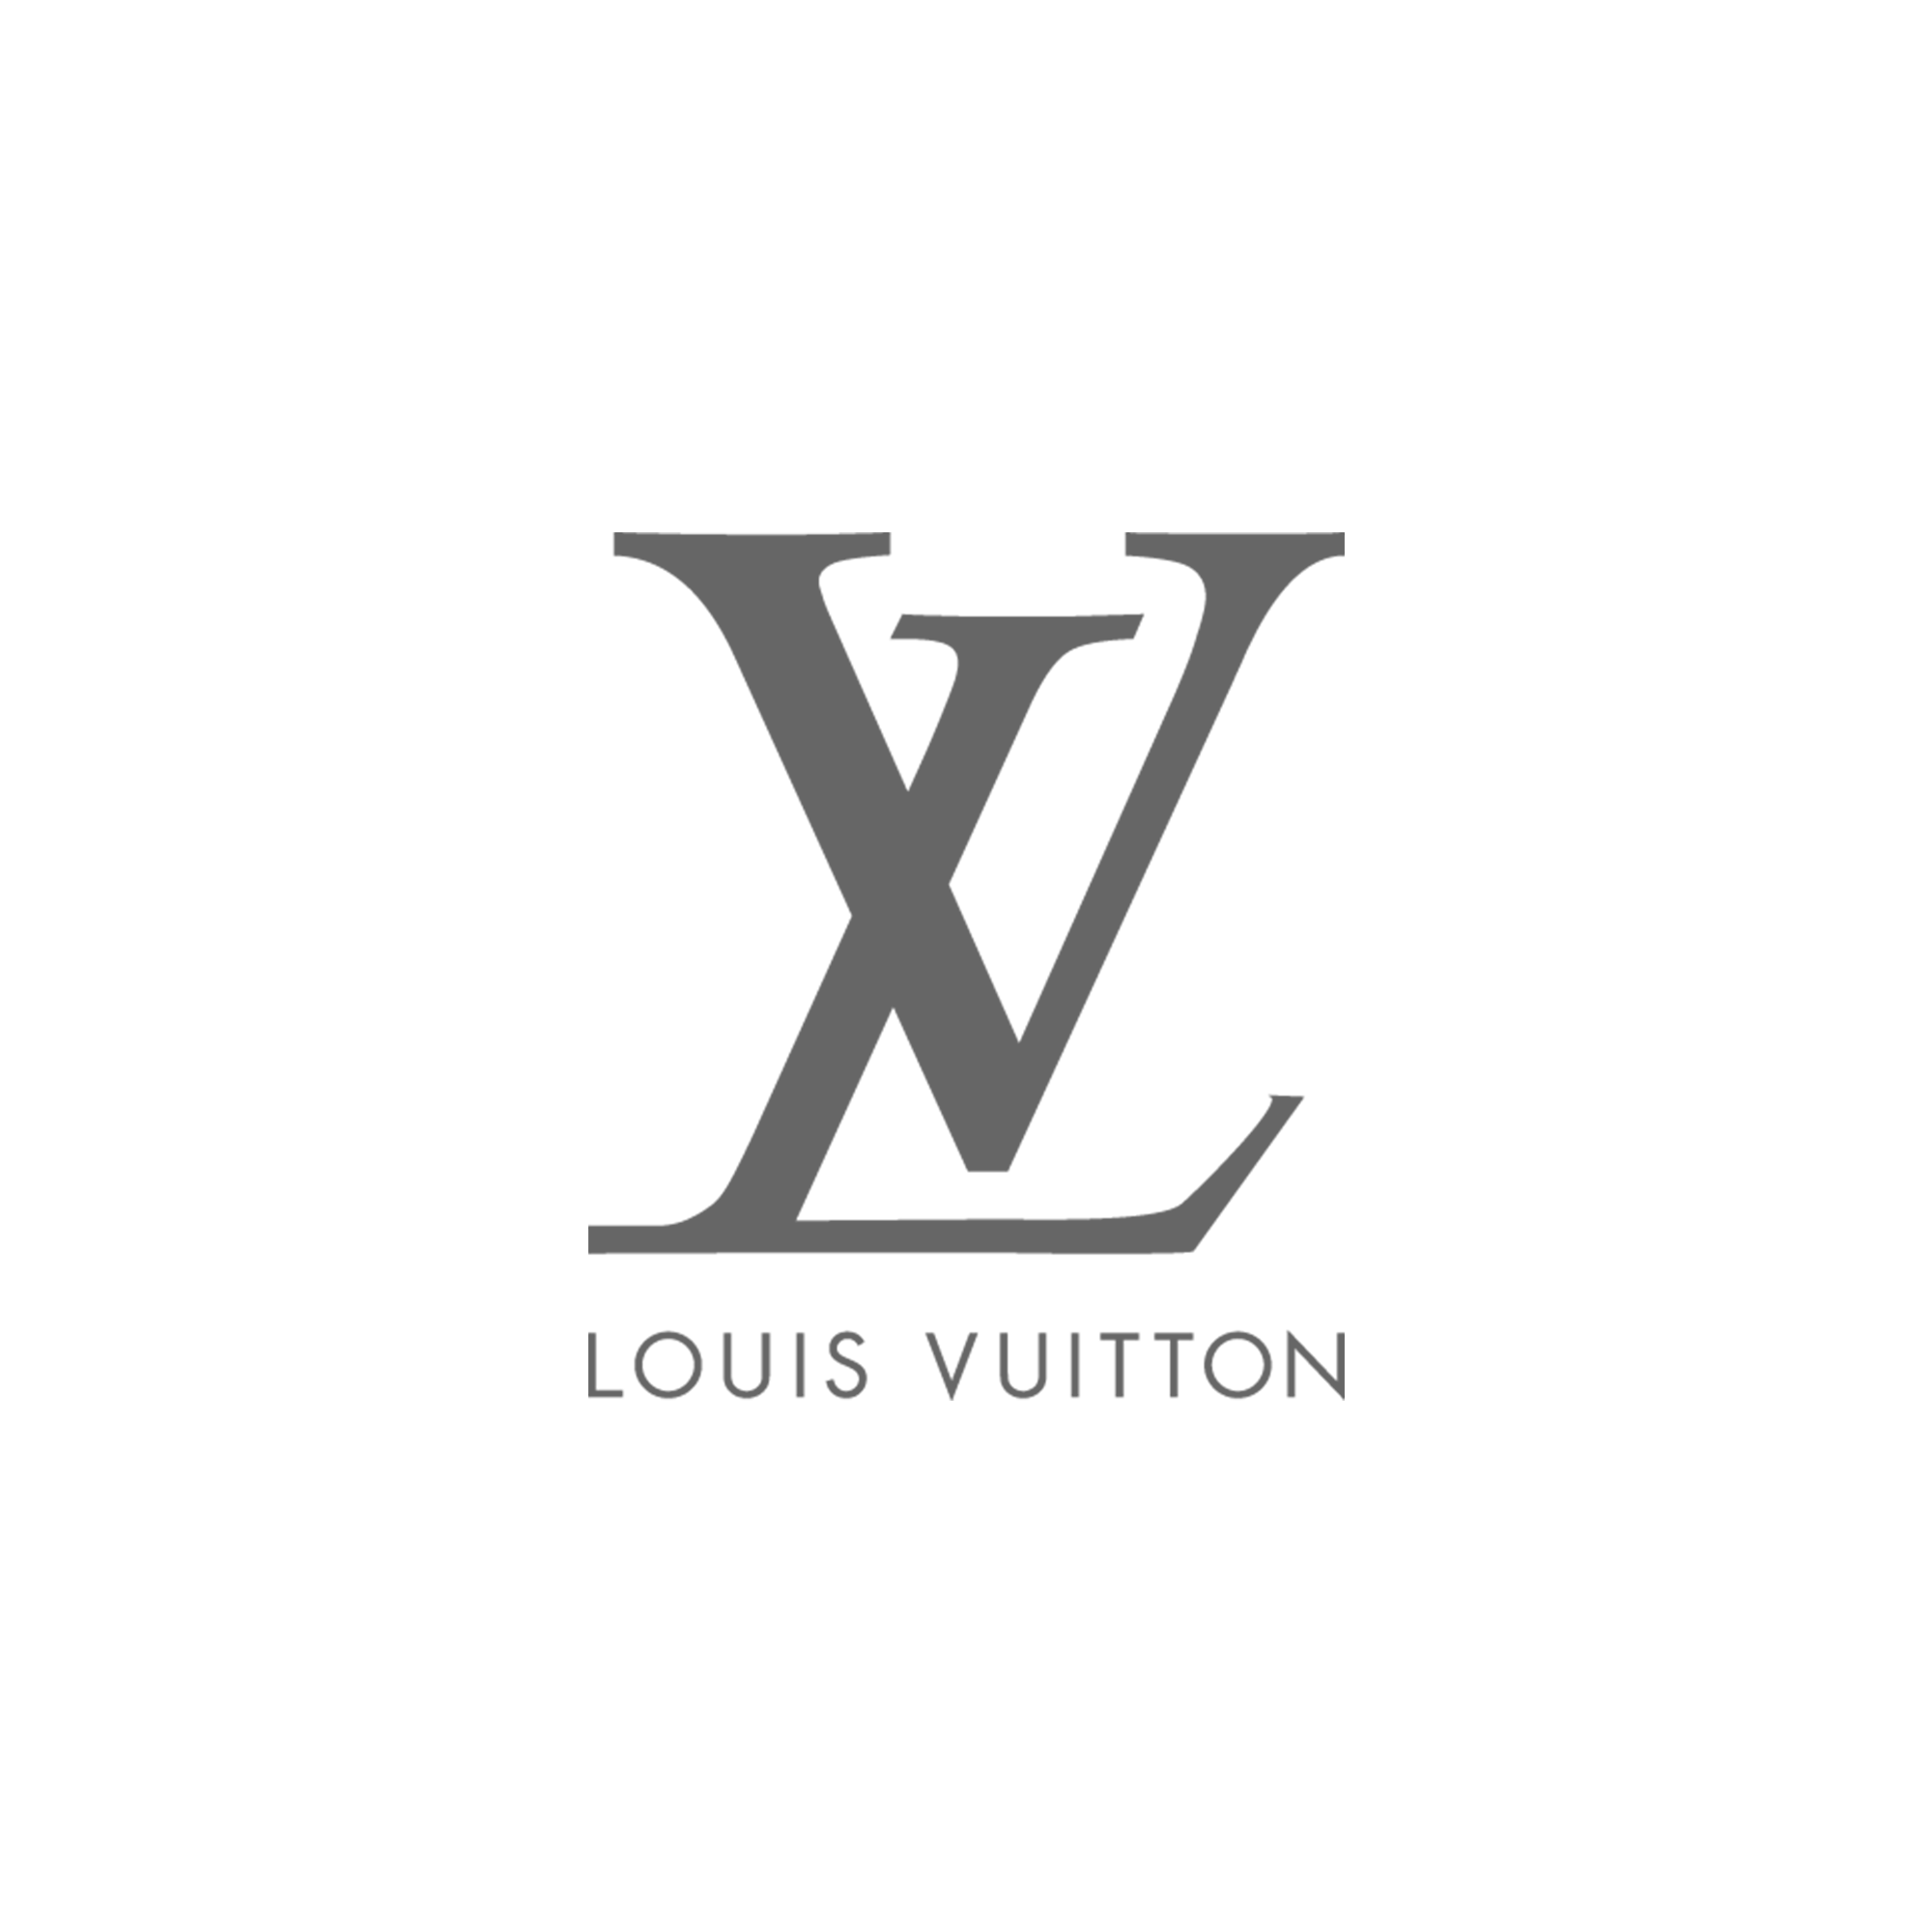 Vuitton Portable Louis Gucci Graphics Logo Chanel PNG Image